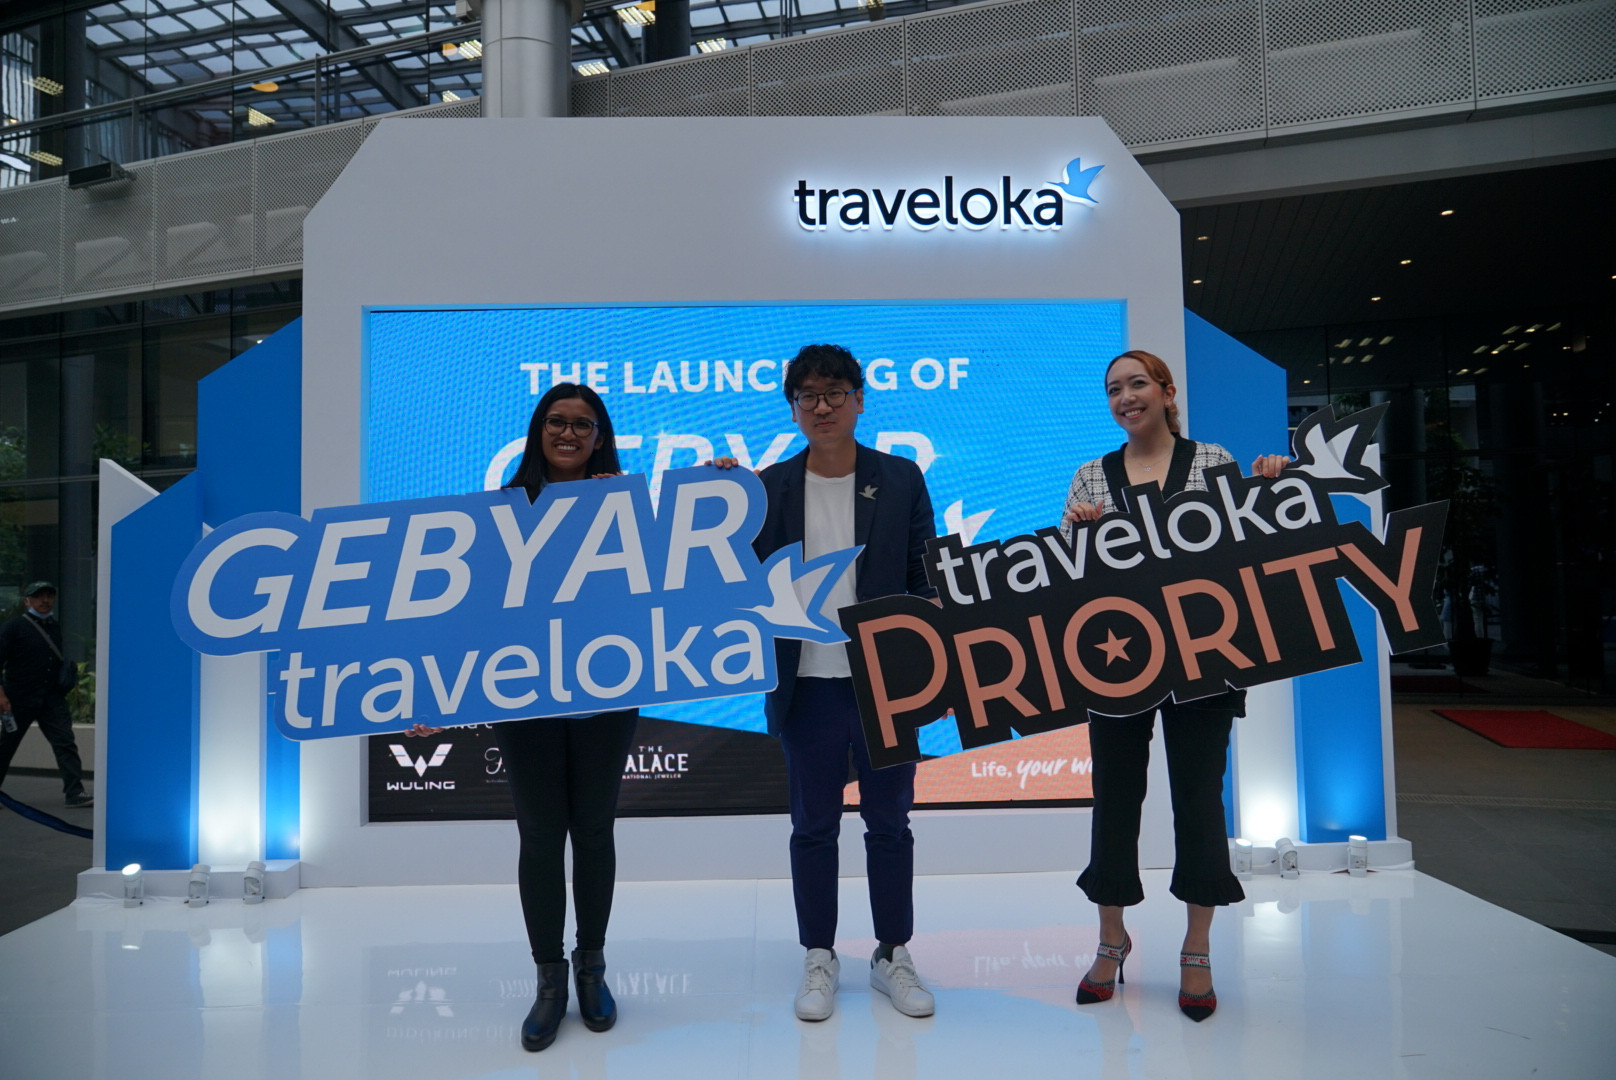 Gelar Program Gebyar Traveloka, Cmk Berkolaborasi Dengan Traveloka